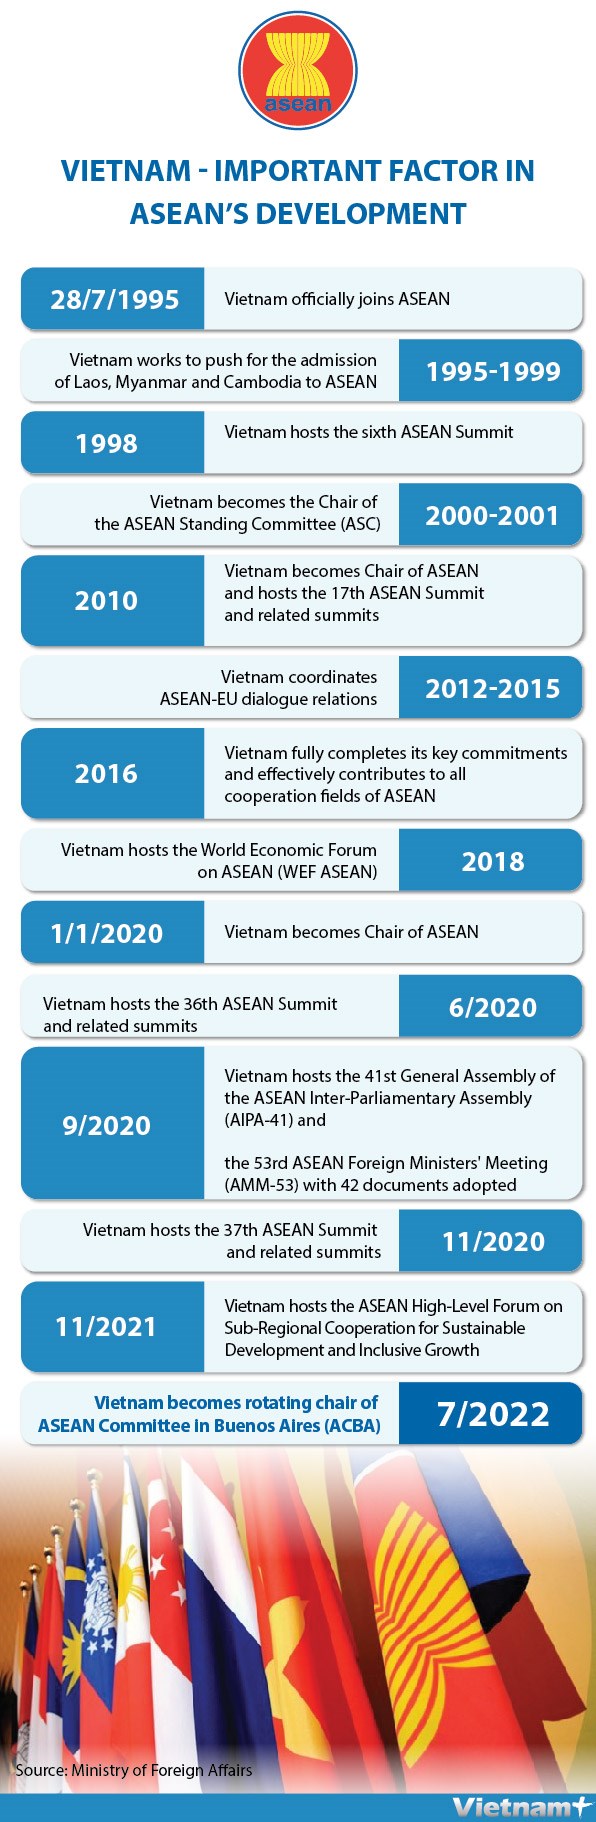 Vietnam - Important factor in ASEAN’s development hinh anh 1